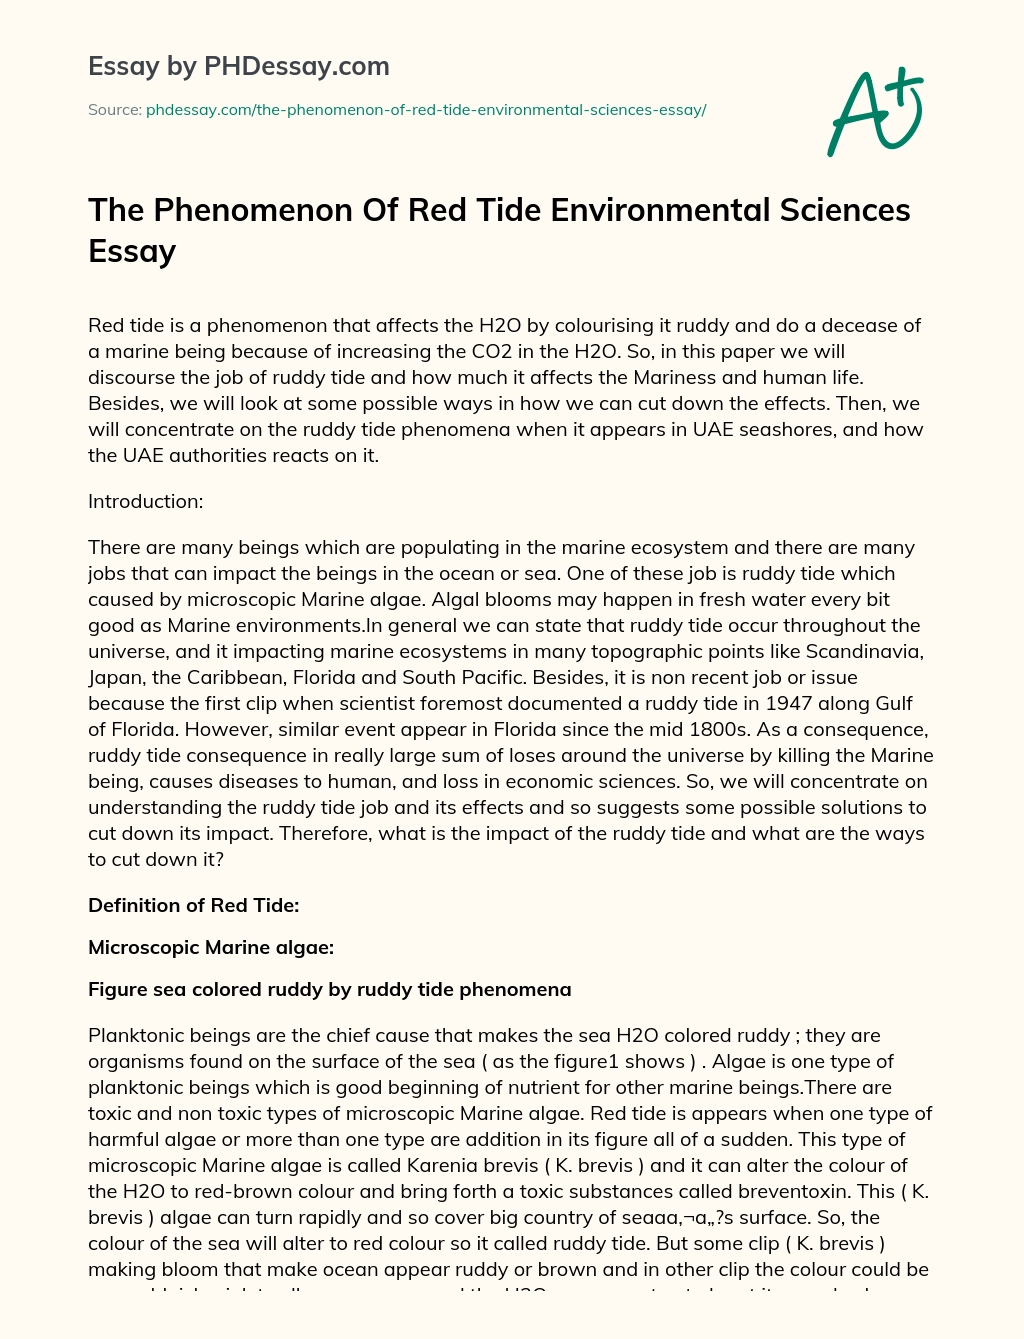 The Phenomenon Of Red Tide Environmental Sciences Essay essay